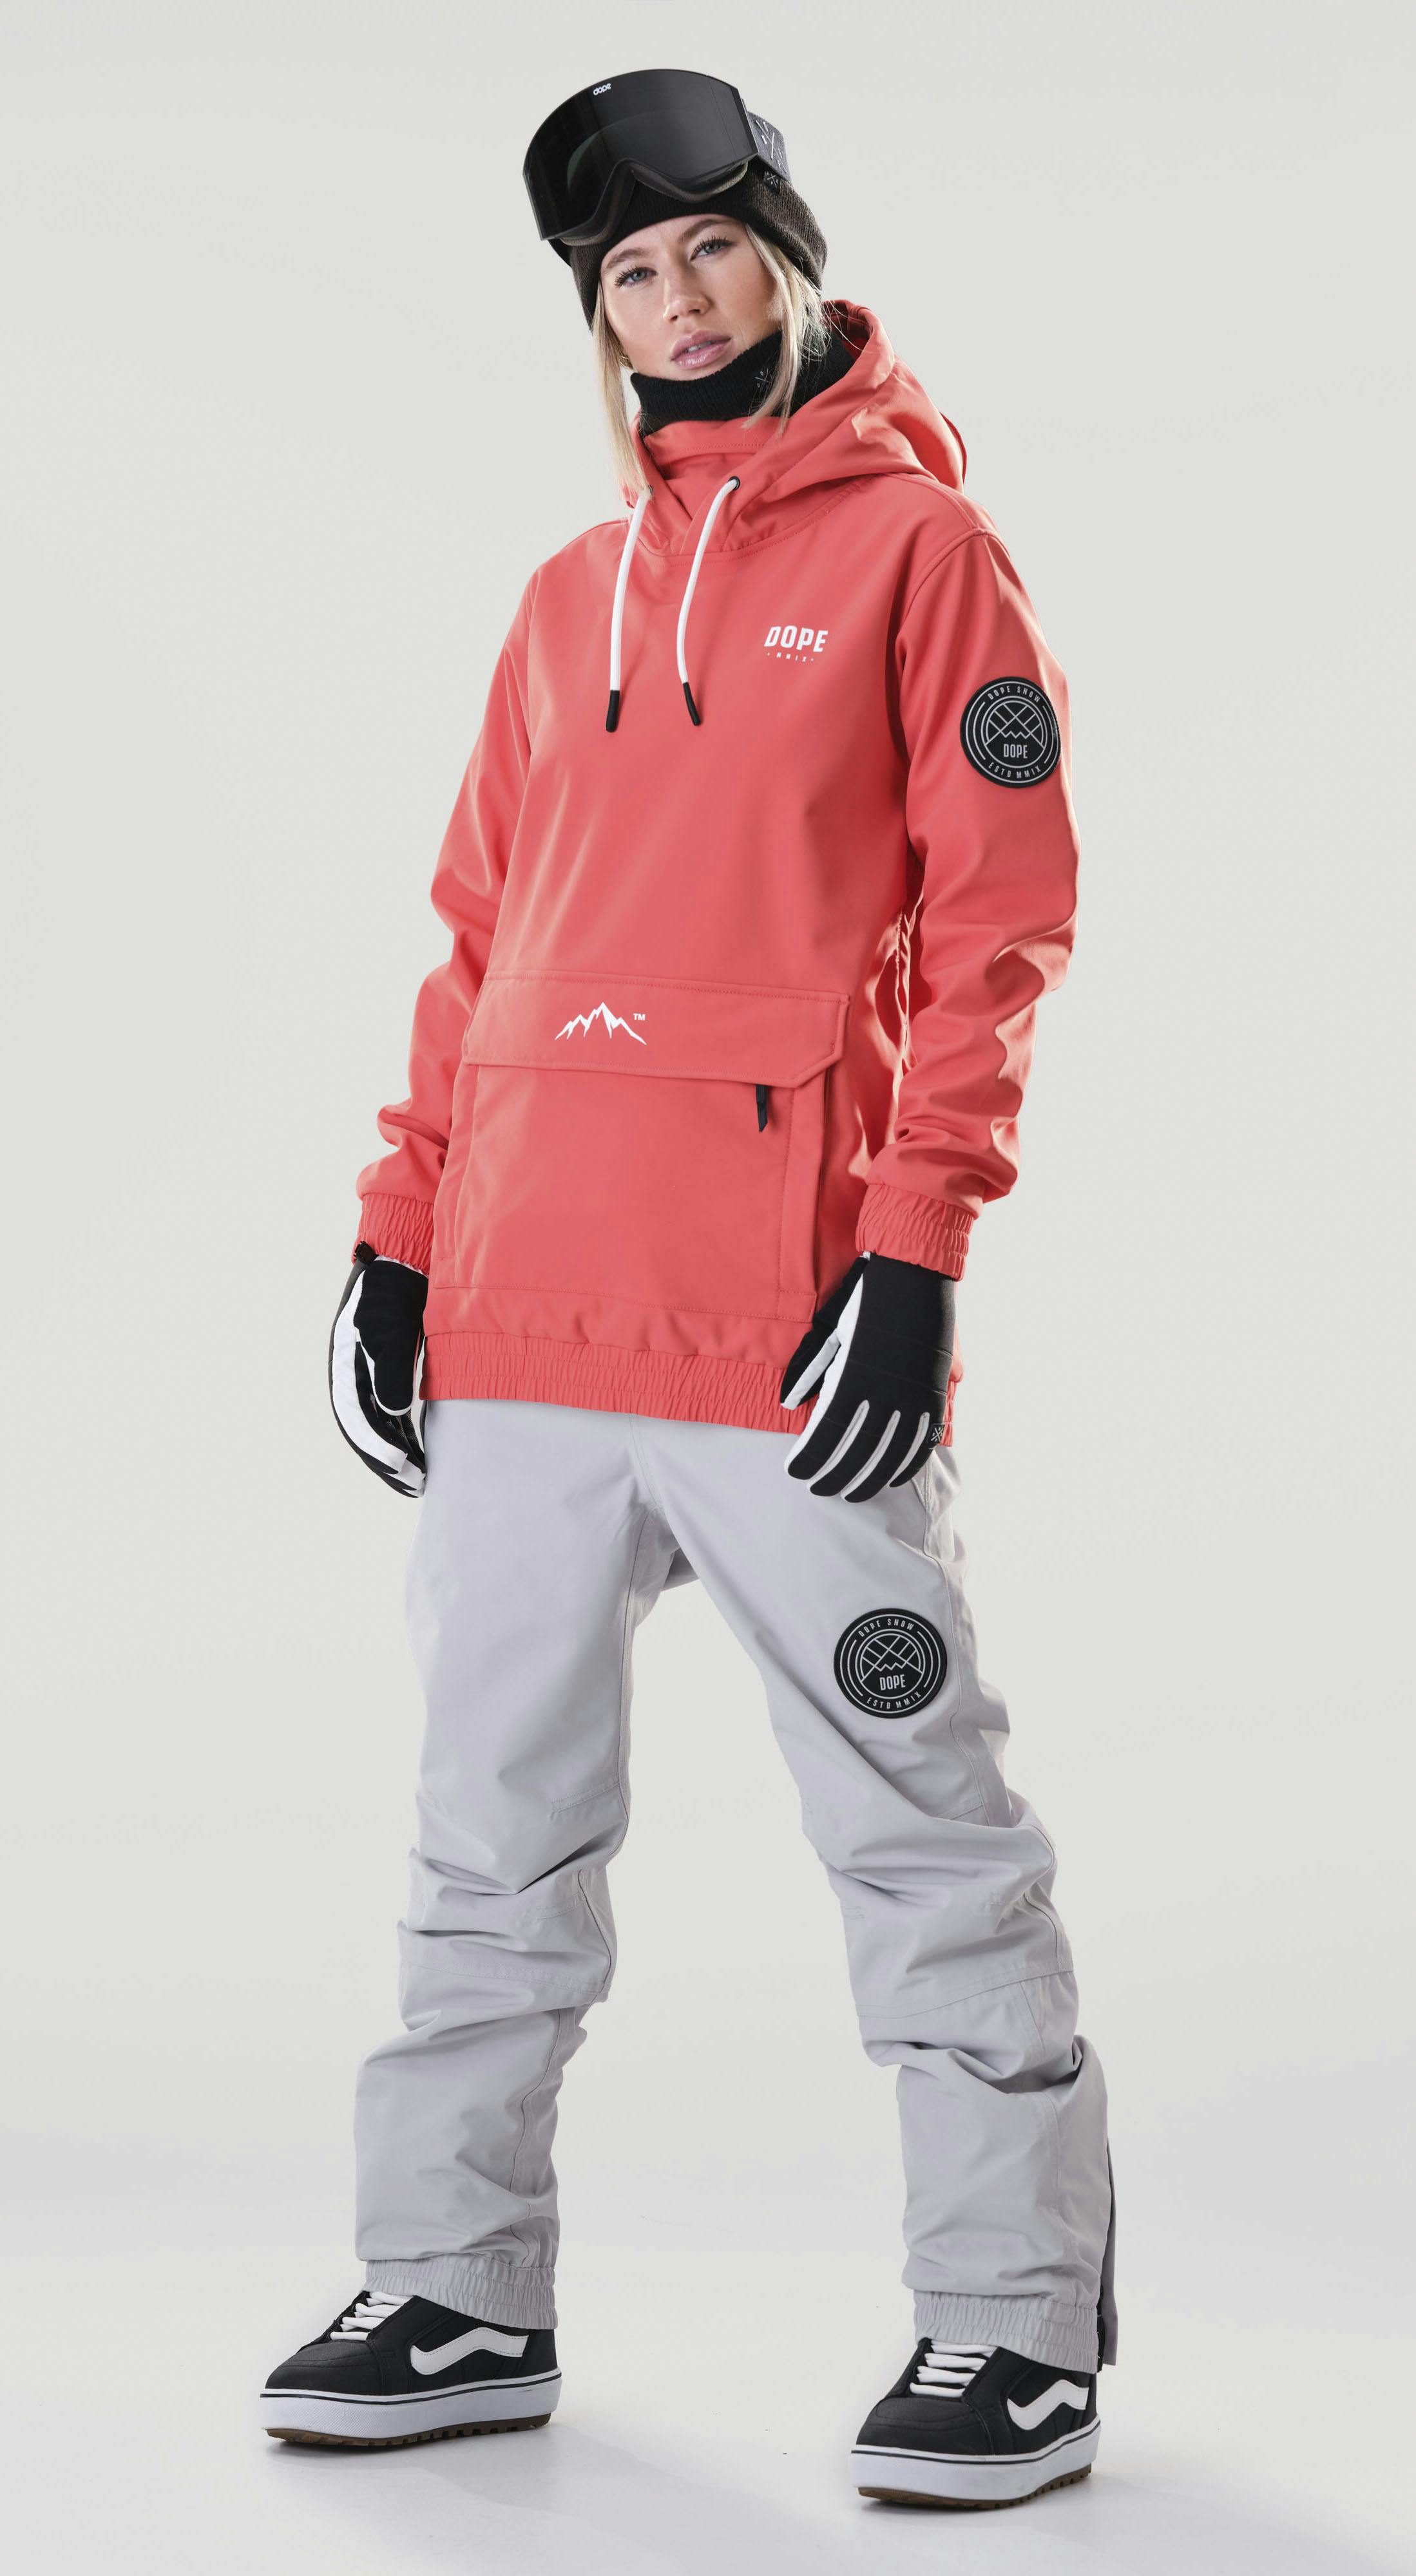 Snowboard clothing